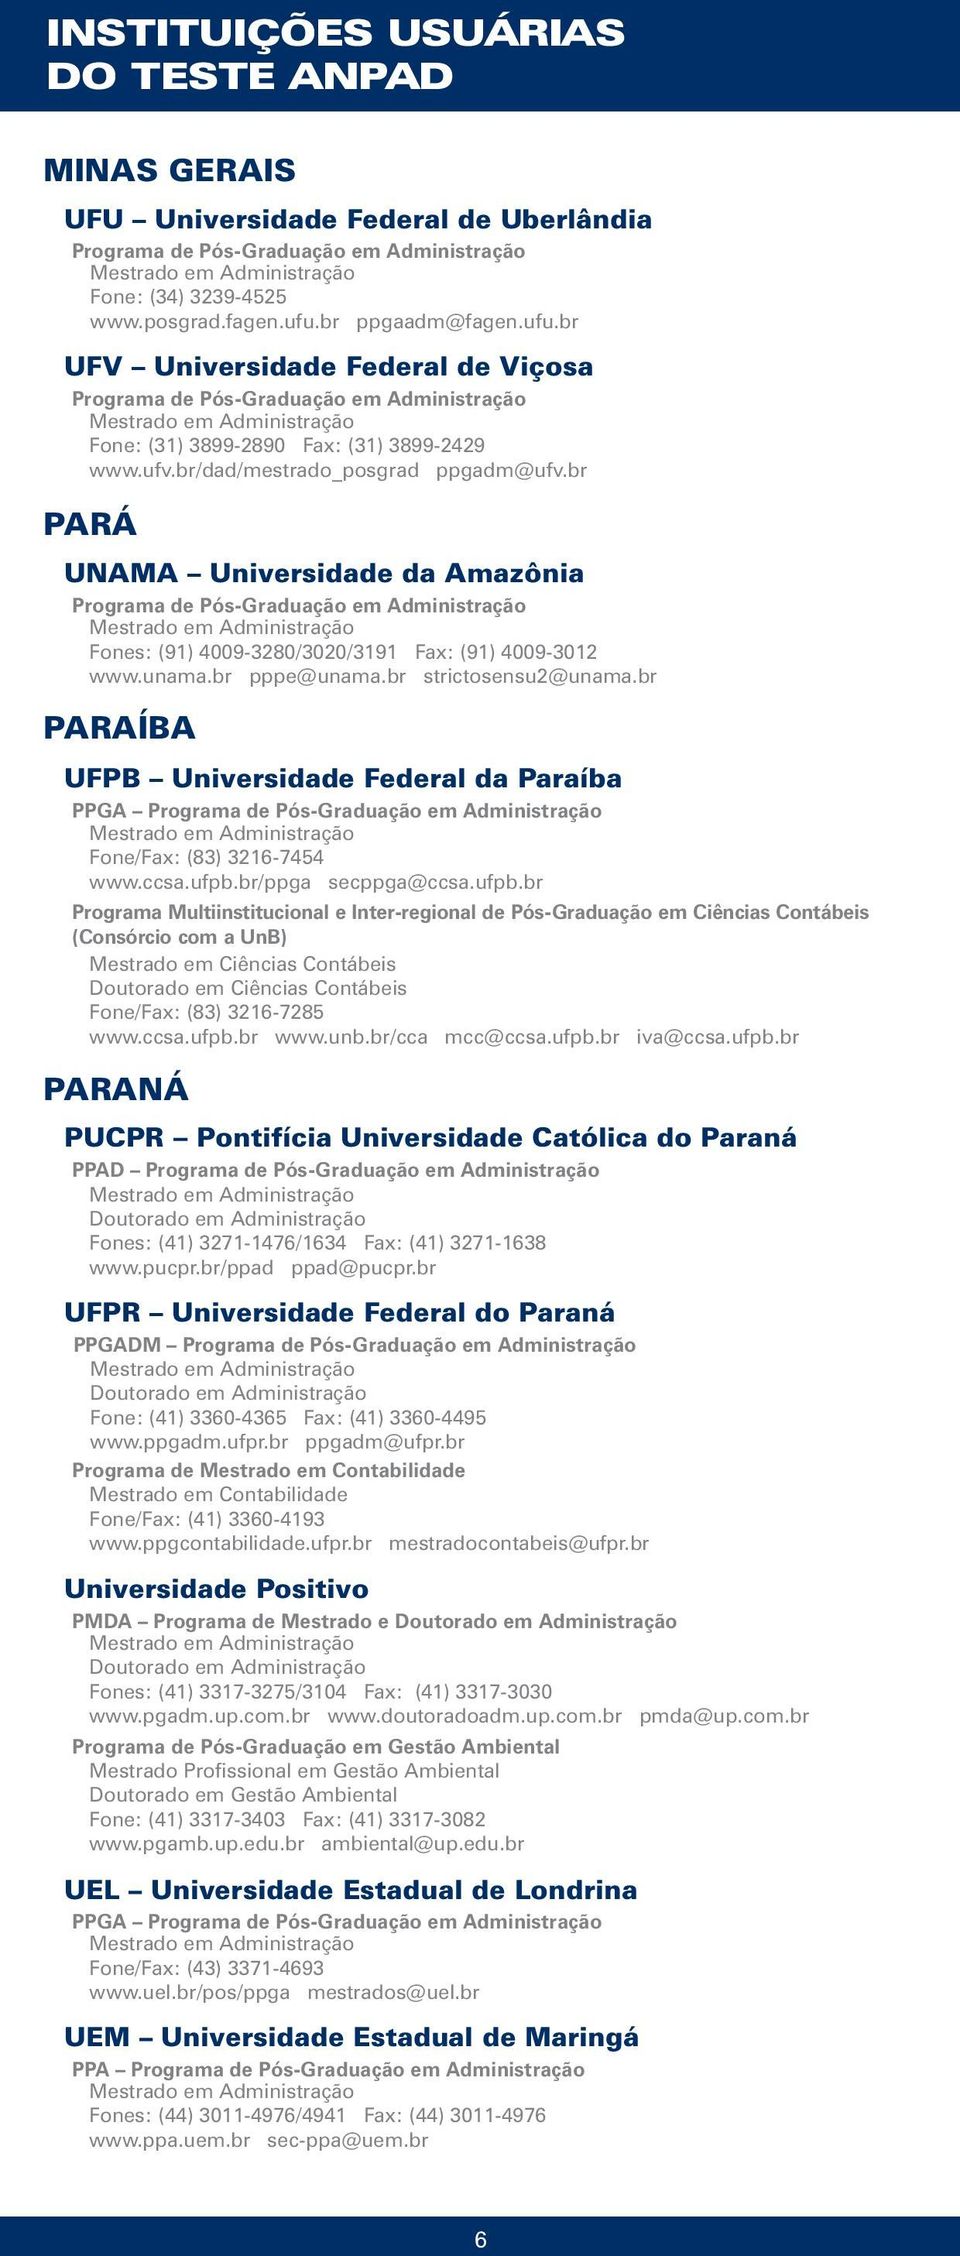 br PARAÍBA UFPB Universidade Federal da Paraíba PPGA Fone/Fax: (83) 3216-7454 www.ccsa.ufpb.